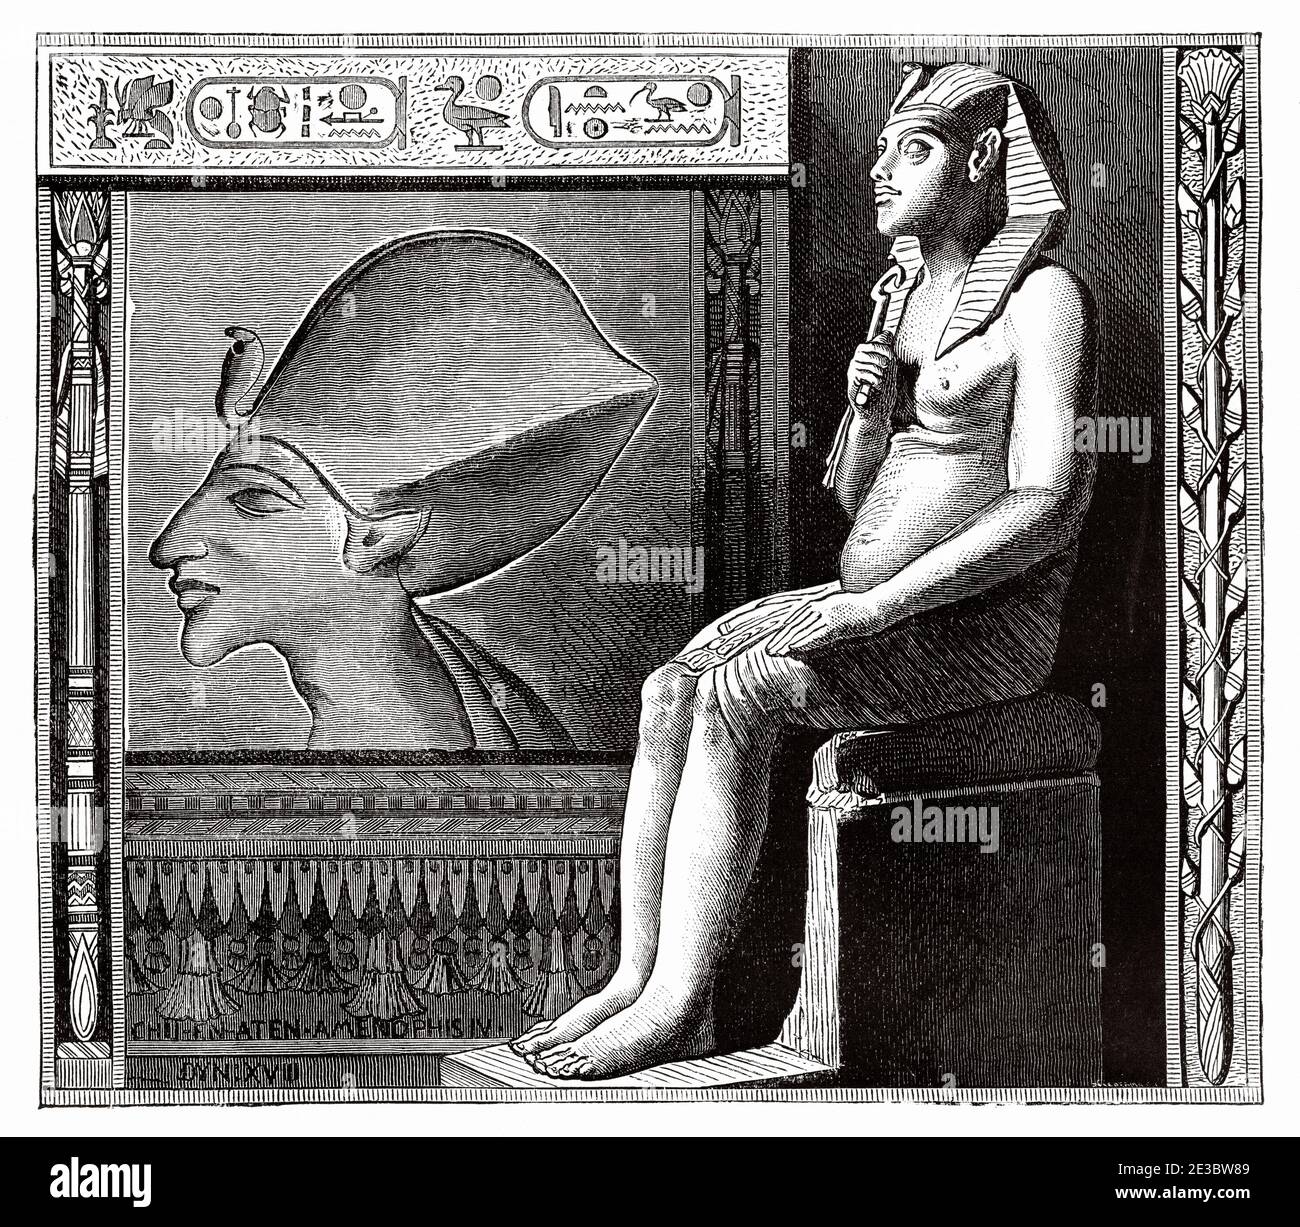 Akhenaten. Amenhotep IV heretic pharaoh, Ancient Egypt. Old 19th century engraved illustration, El Mundo Ilustrado 1880 Stock Photo